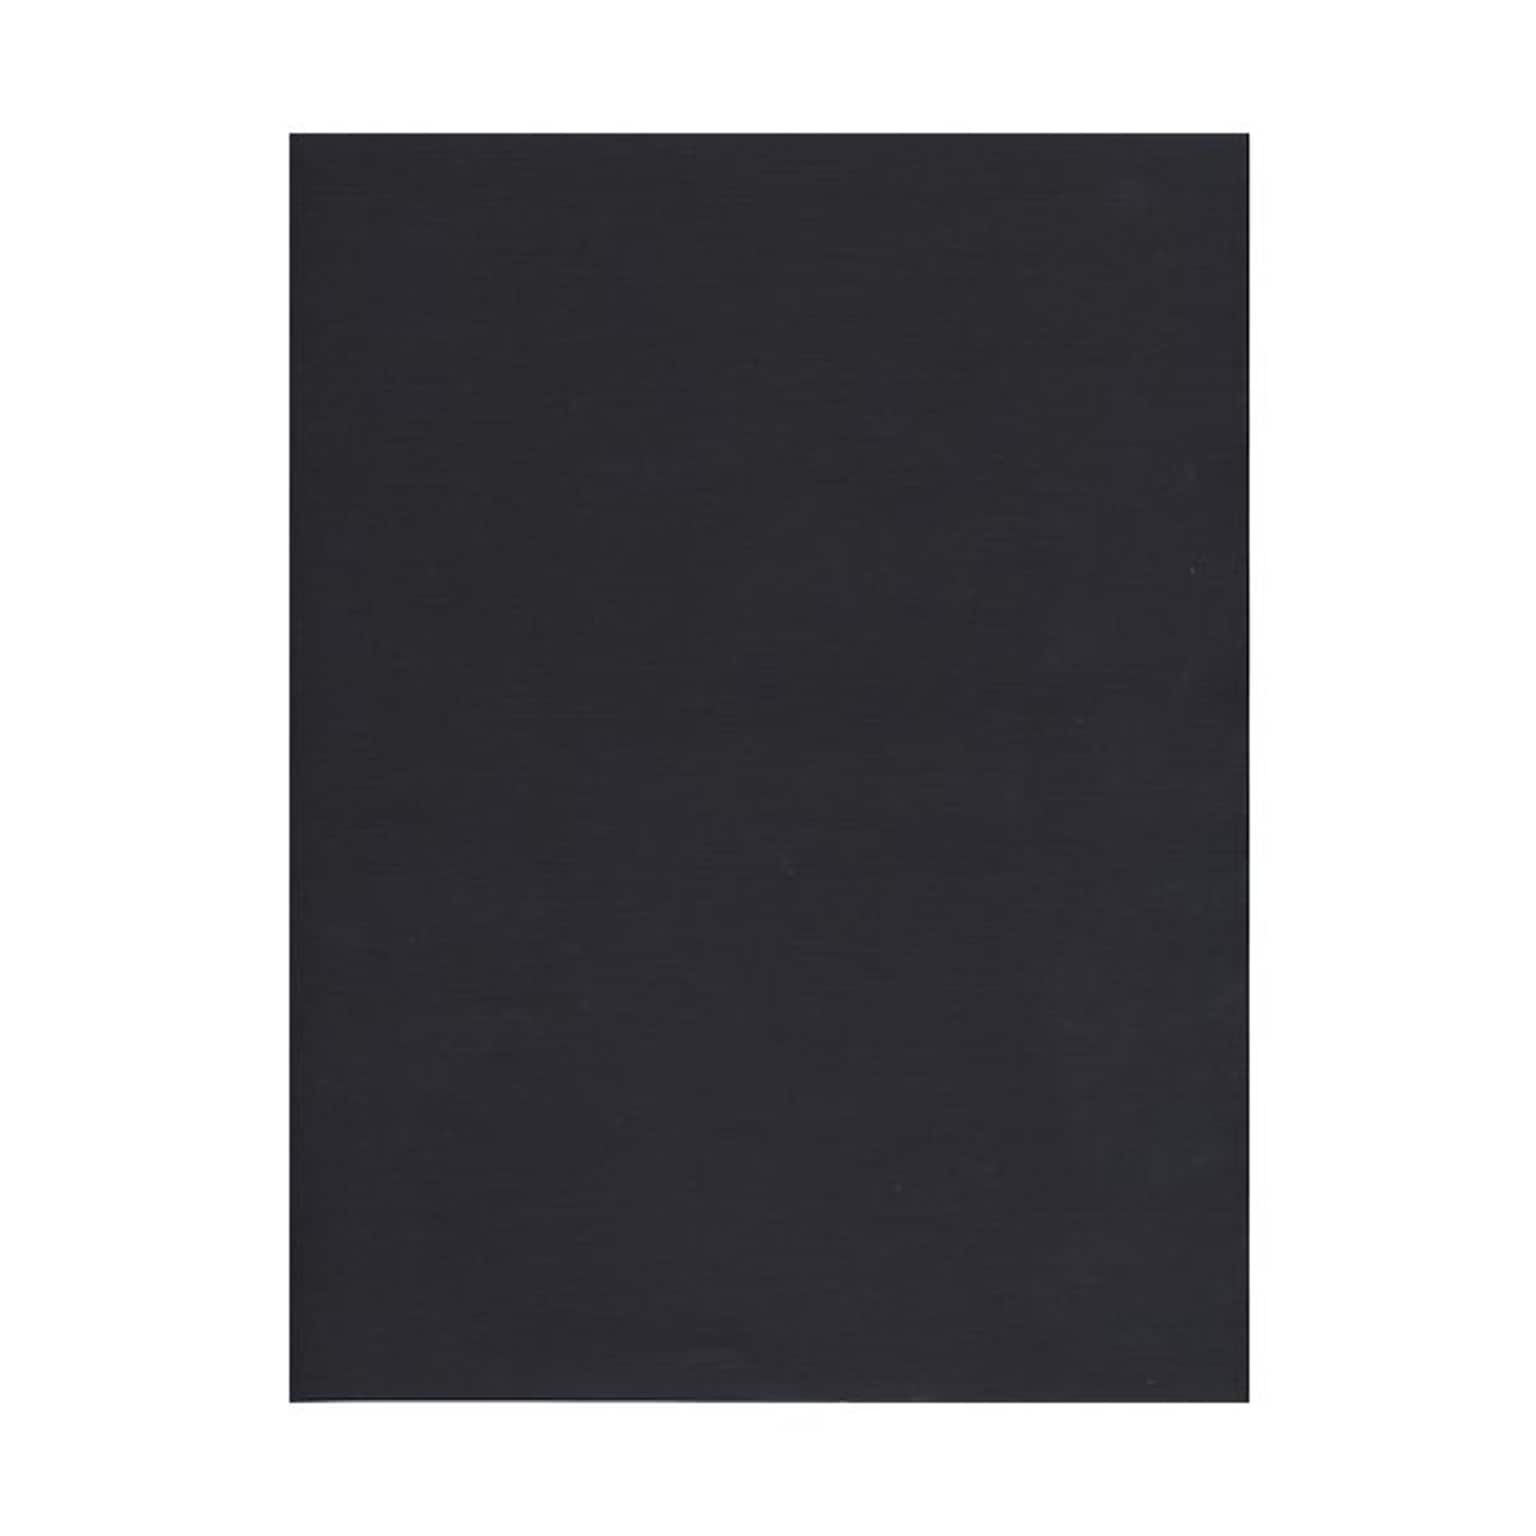 JAM Paper 8.5 x 11 Color Copy Paper, 32 lbs., Black, 500 Sheets/Ream (11130B)